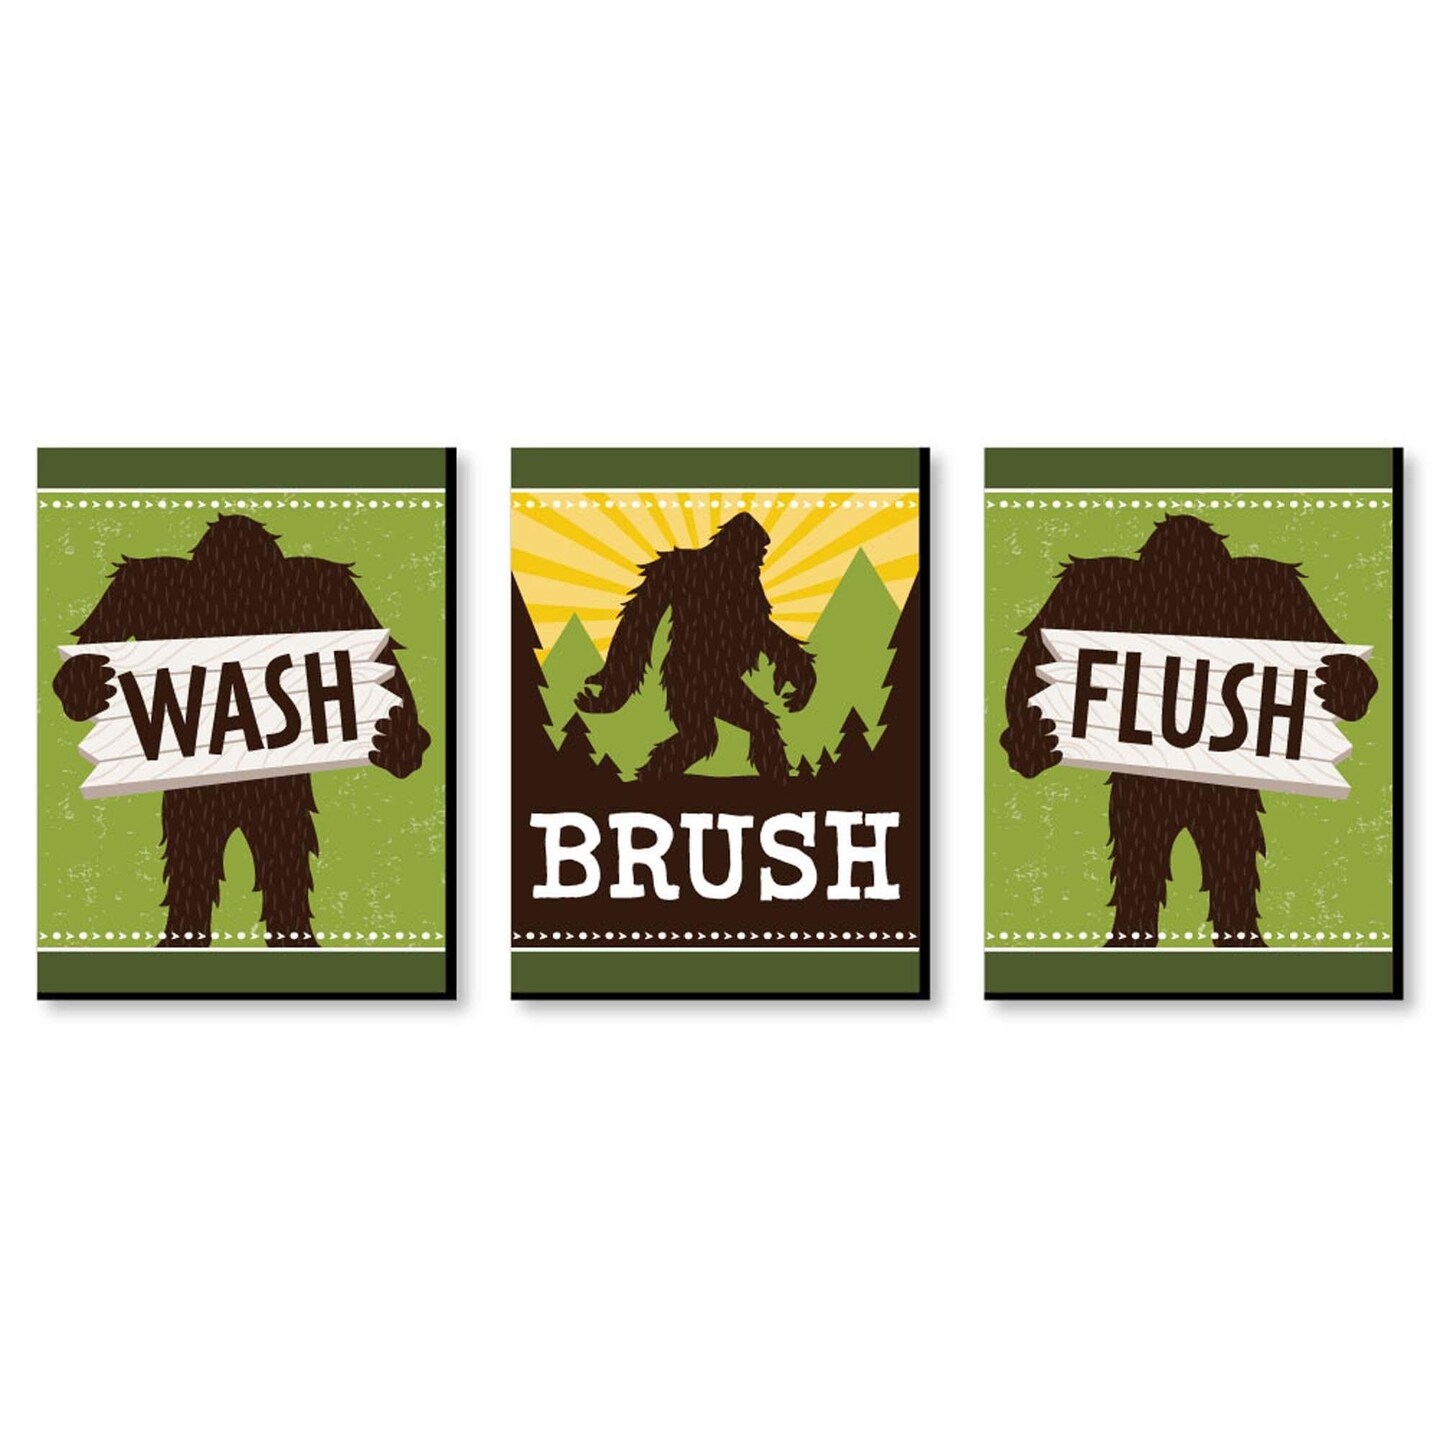 Big Dot of Happiness Sasquatch Crossing - Bigfoot Kids Bathroom Rules Wall Art - 7.5 x 10 inches - Set of 3 Signs - Wash, Brush, Flush